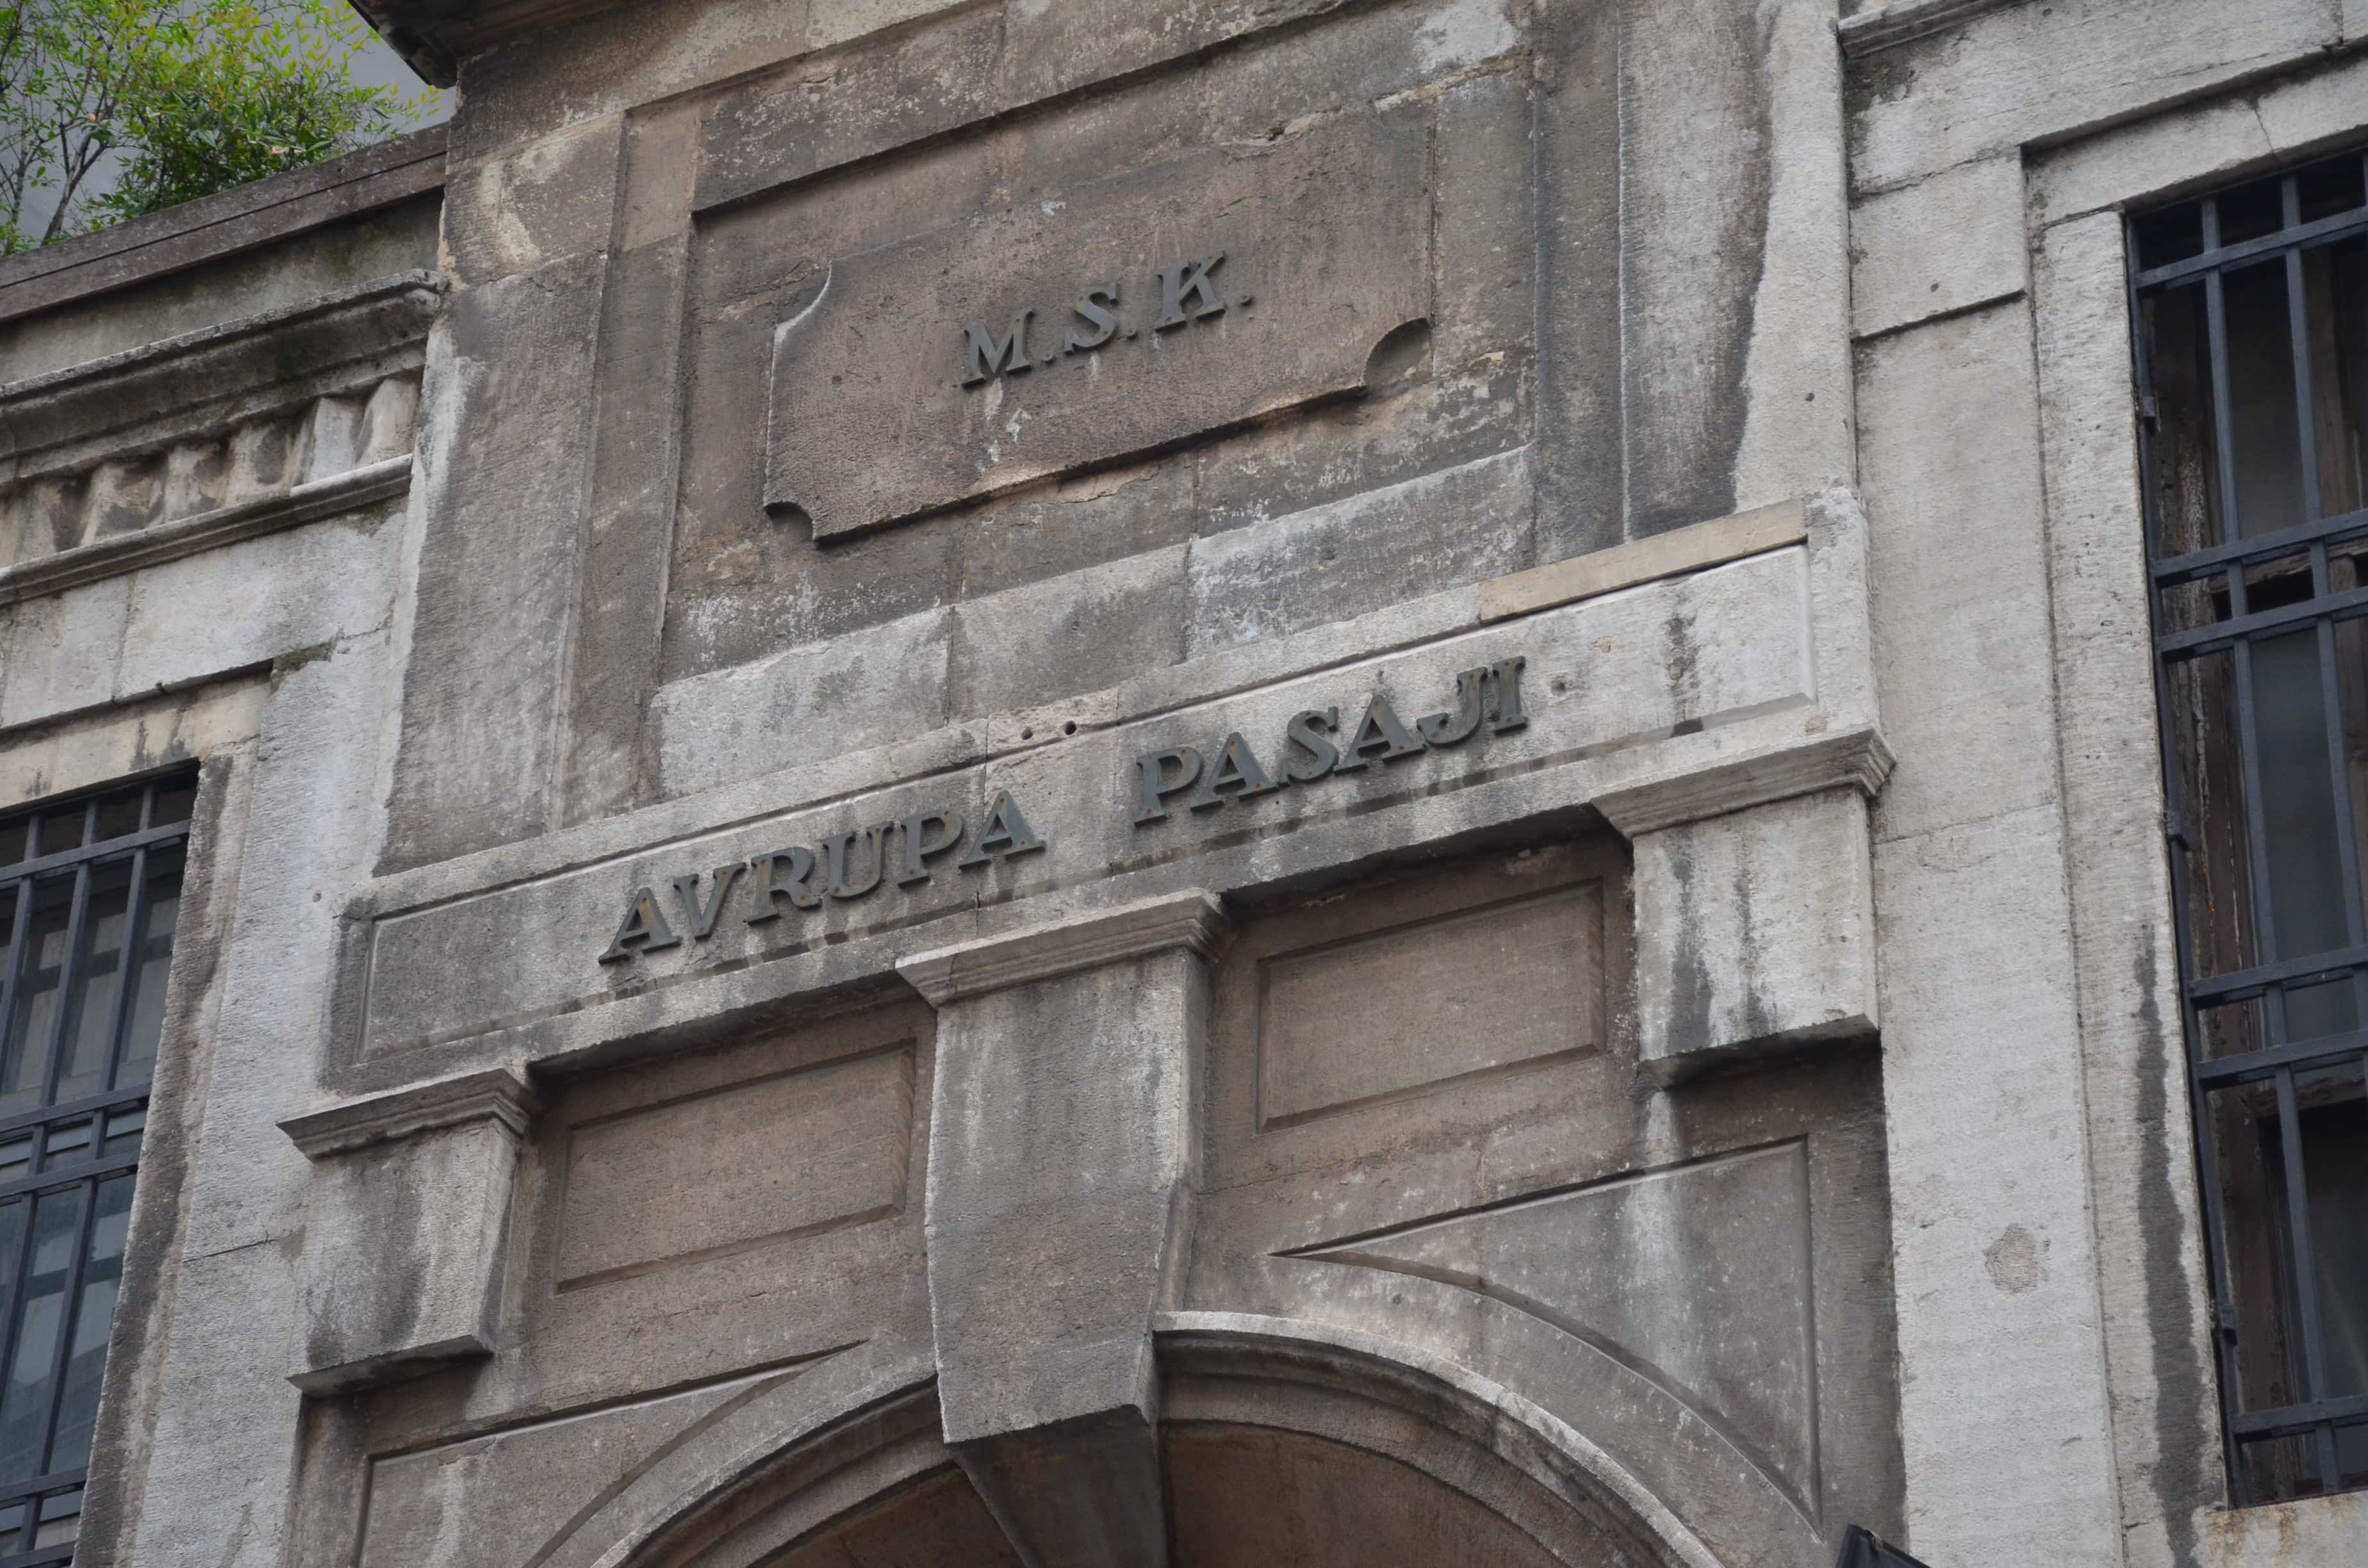 Inscription above the entrance to Europe Passage on Meşrutiyet Street in Taksim, Istanbul, Turkey